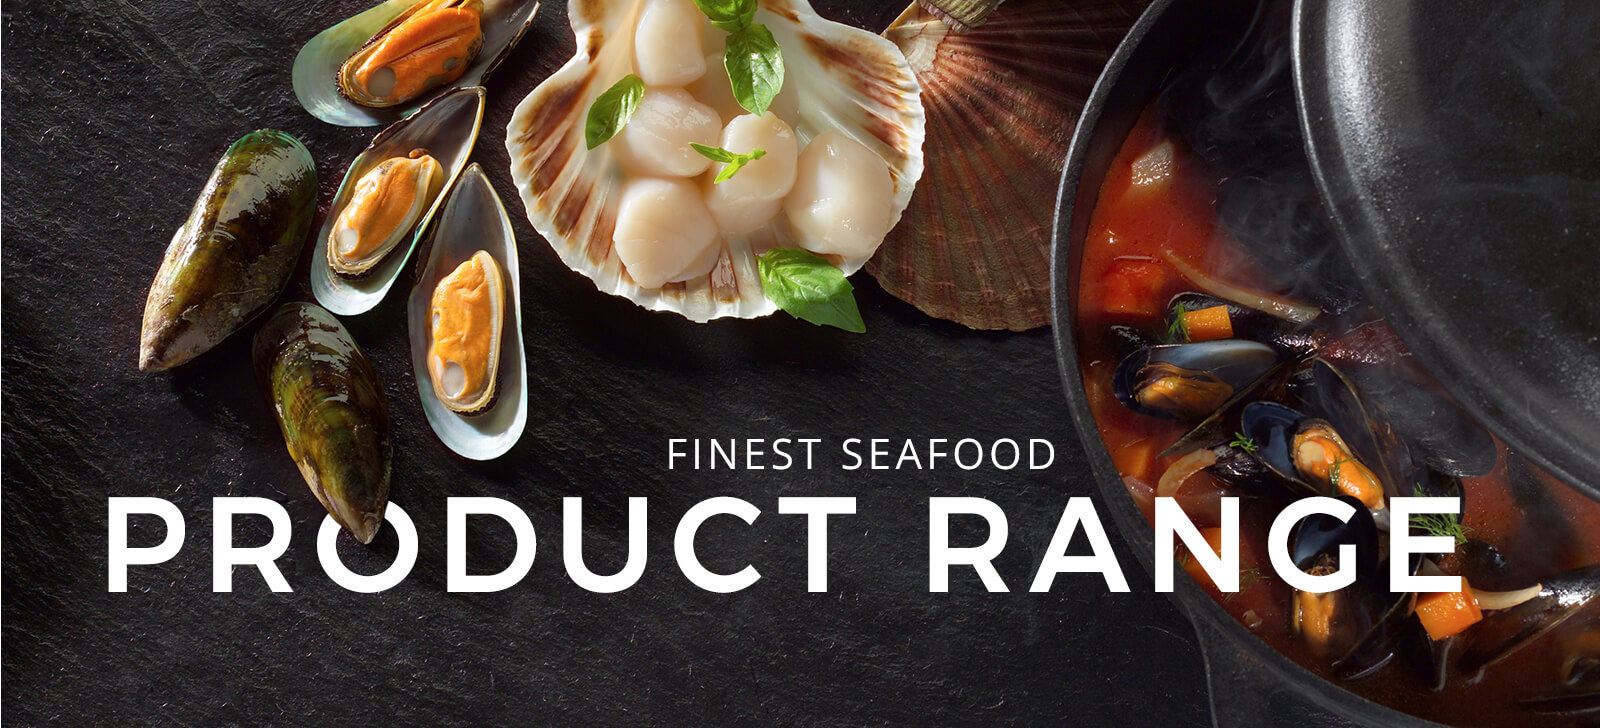 Finest Seafood - Product Range